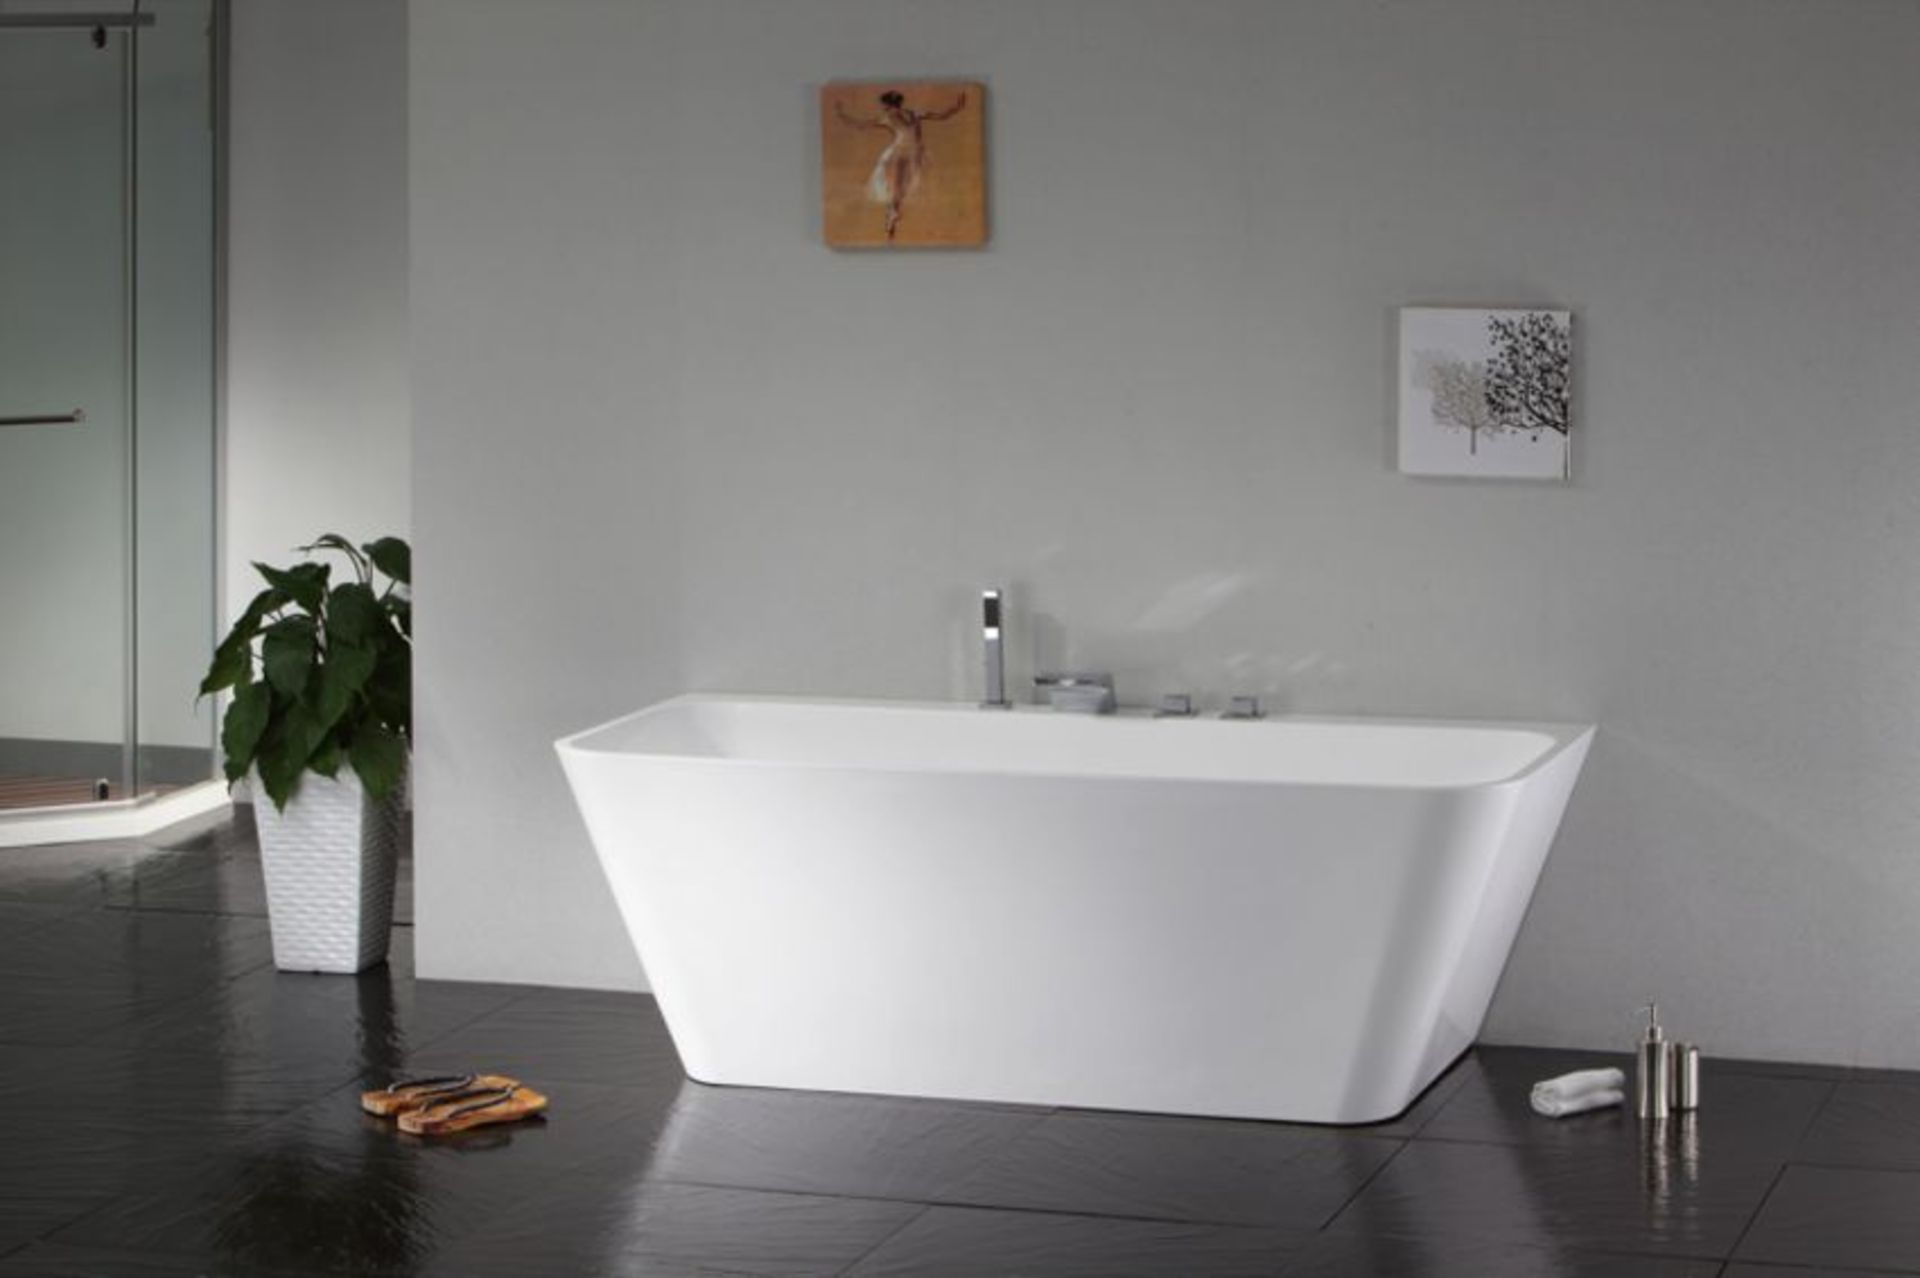 1 x MarbleTech Luxury Harmony Bath - Size: 1700 x 750 x 580 (mm) - Original RRP £2,100 - New and - Image 12 of 13